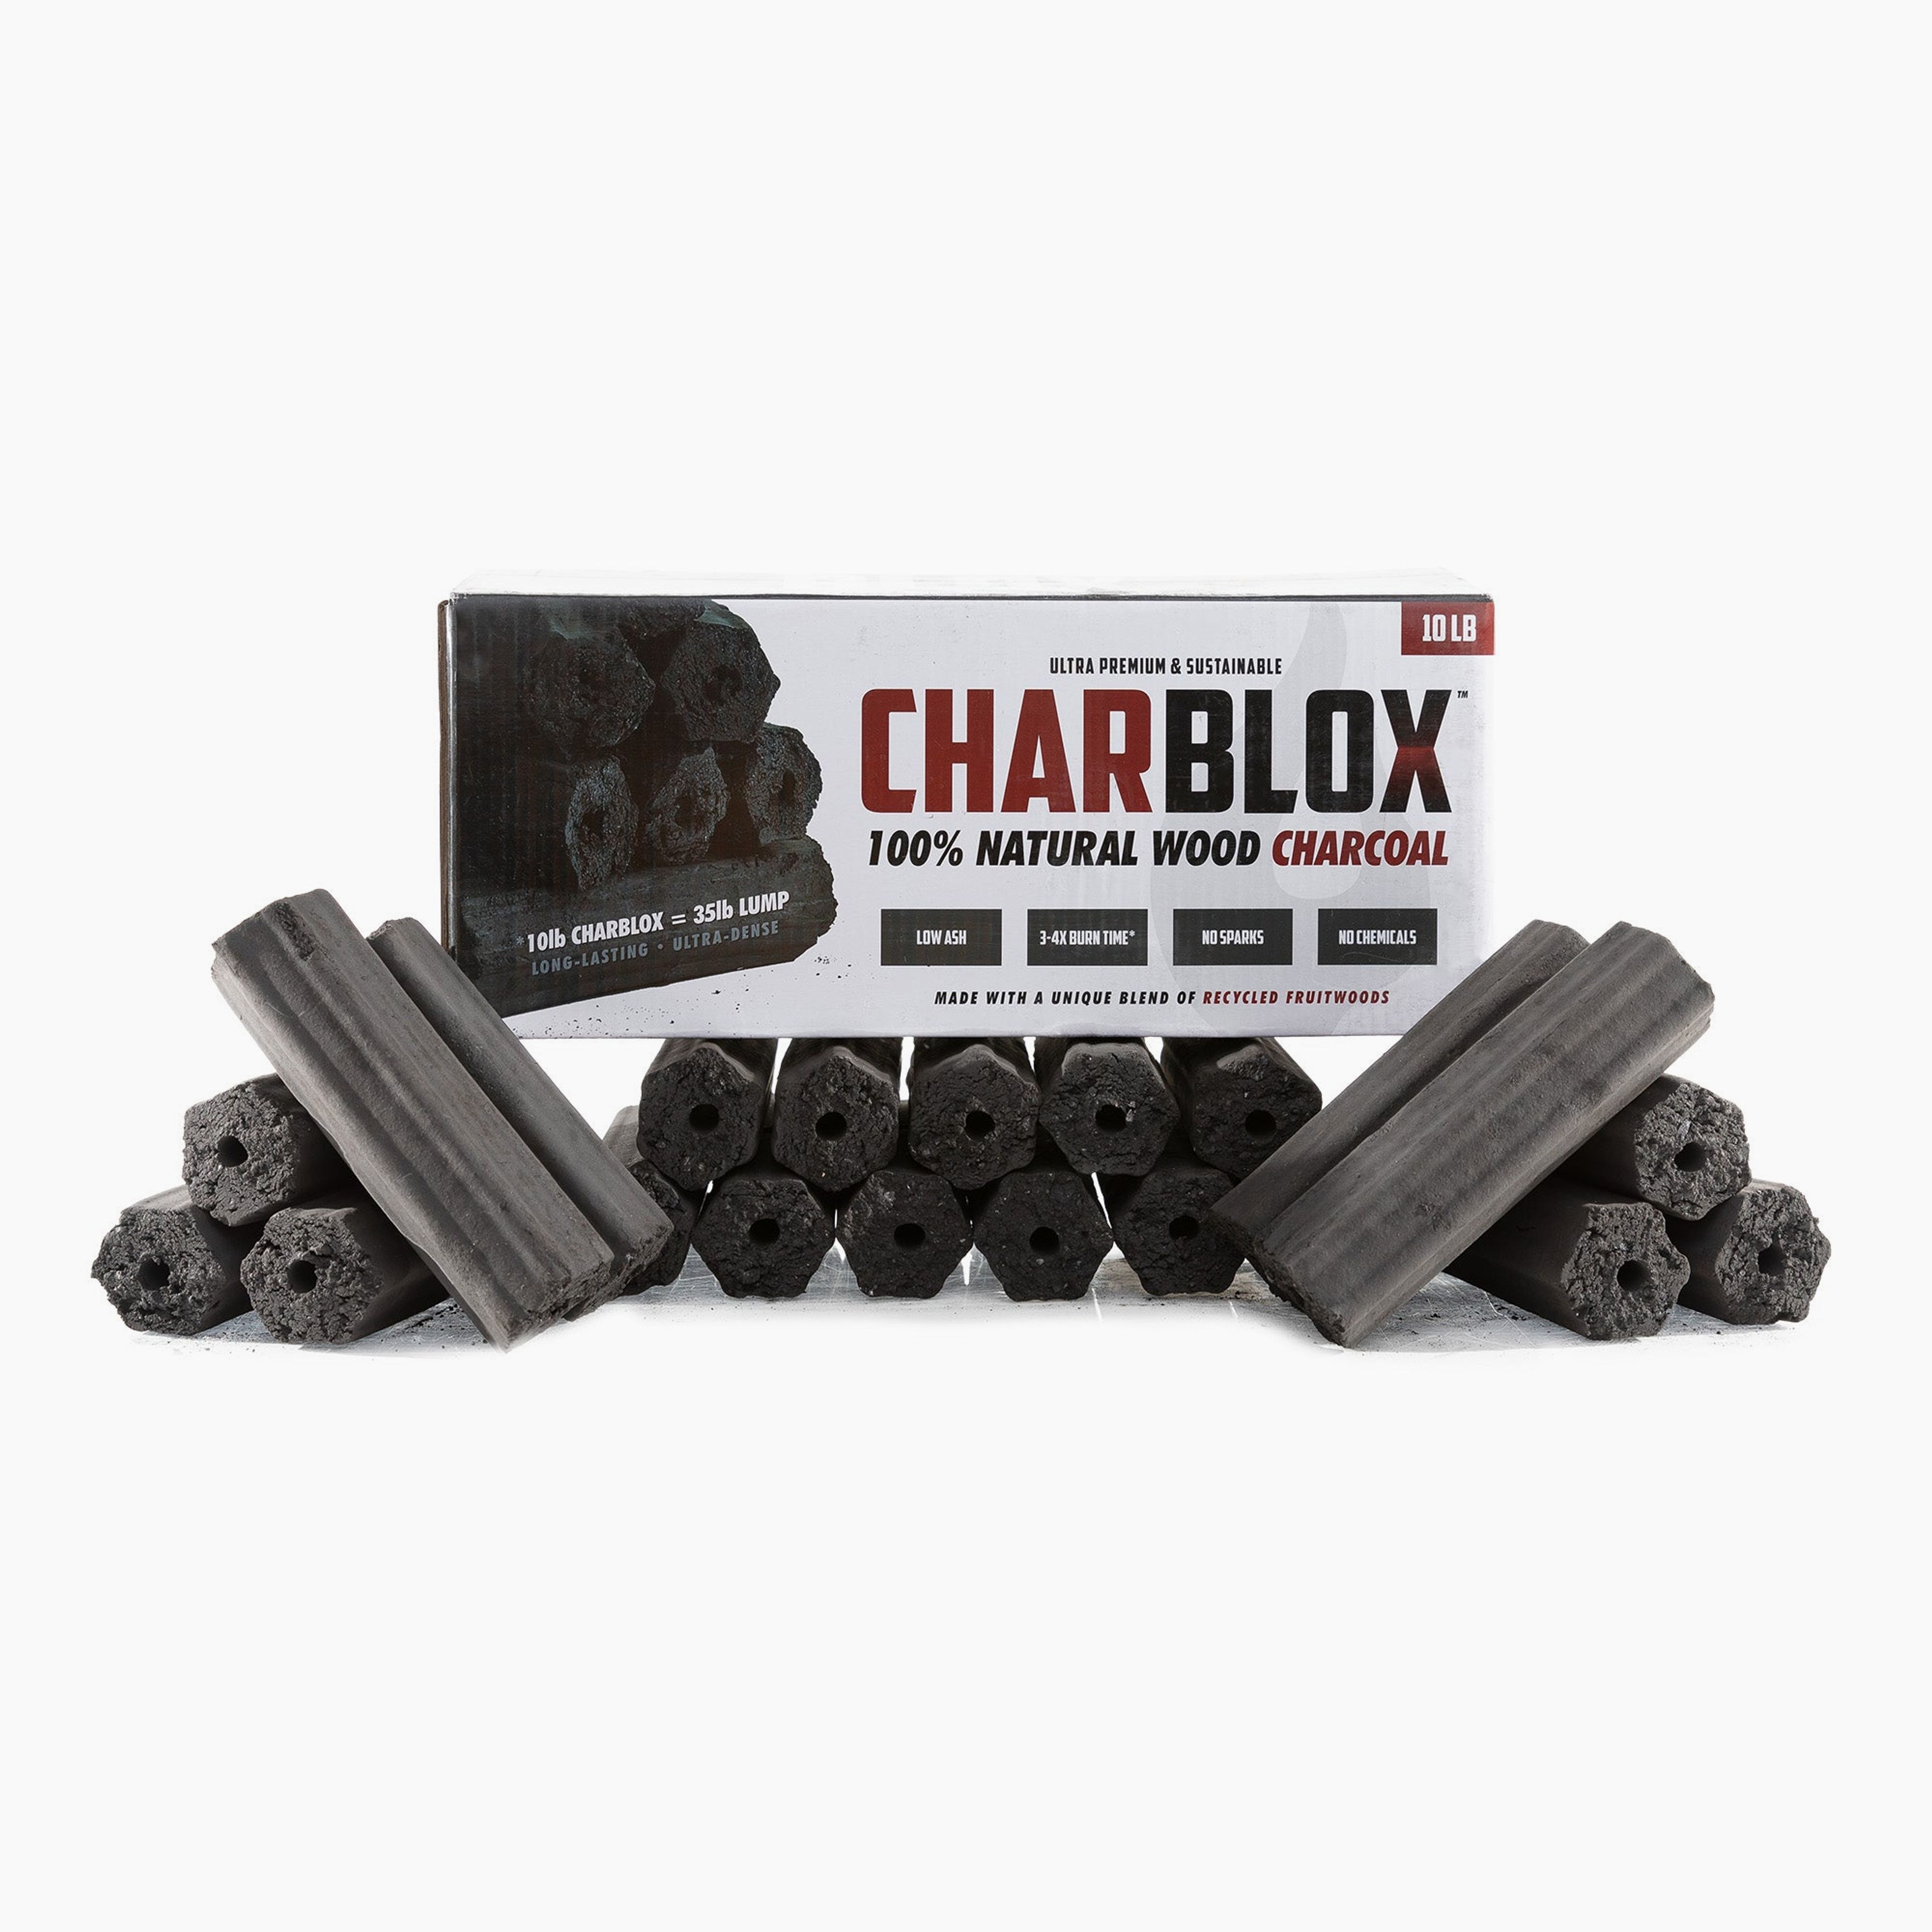 CHARBLOX Classic Hardwood Grilling Charcoal Logs